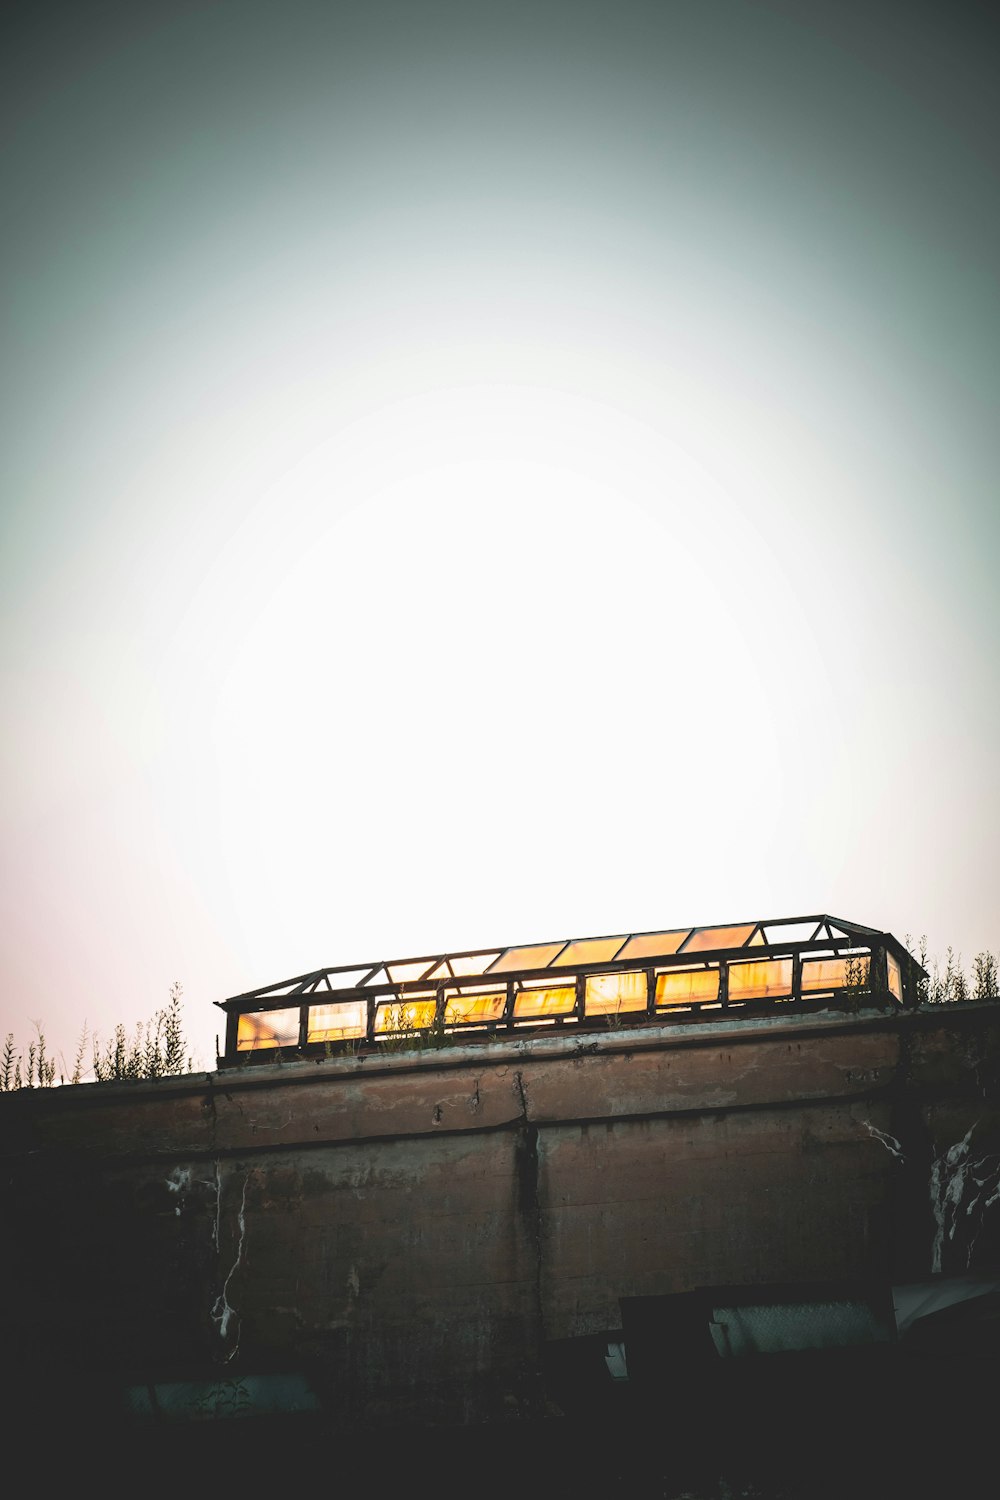 a school bus on a bridge